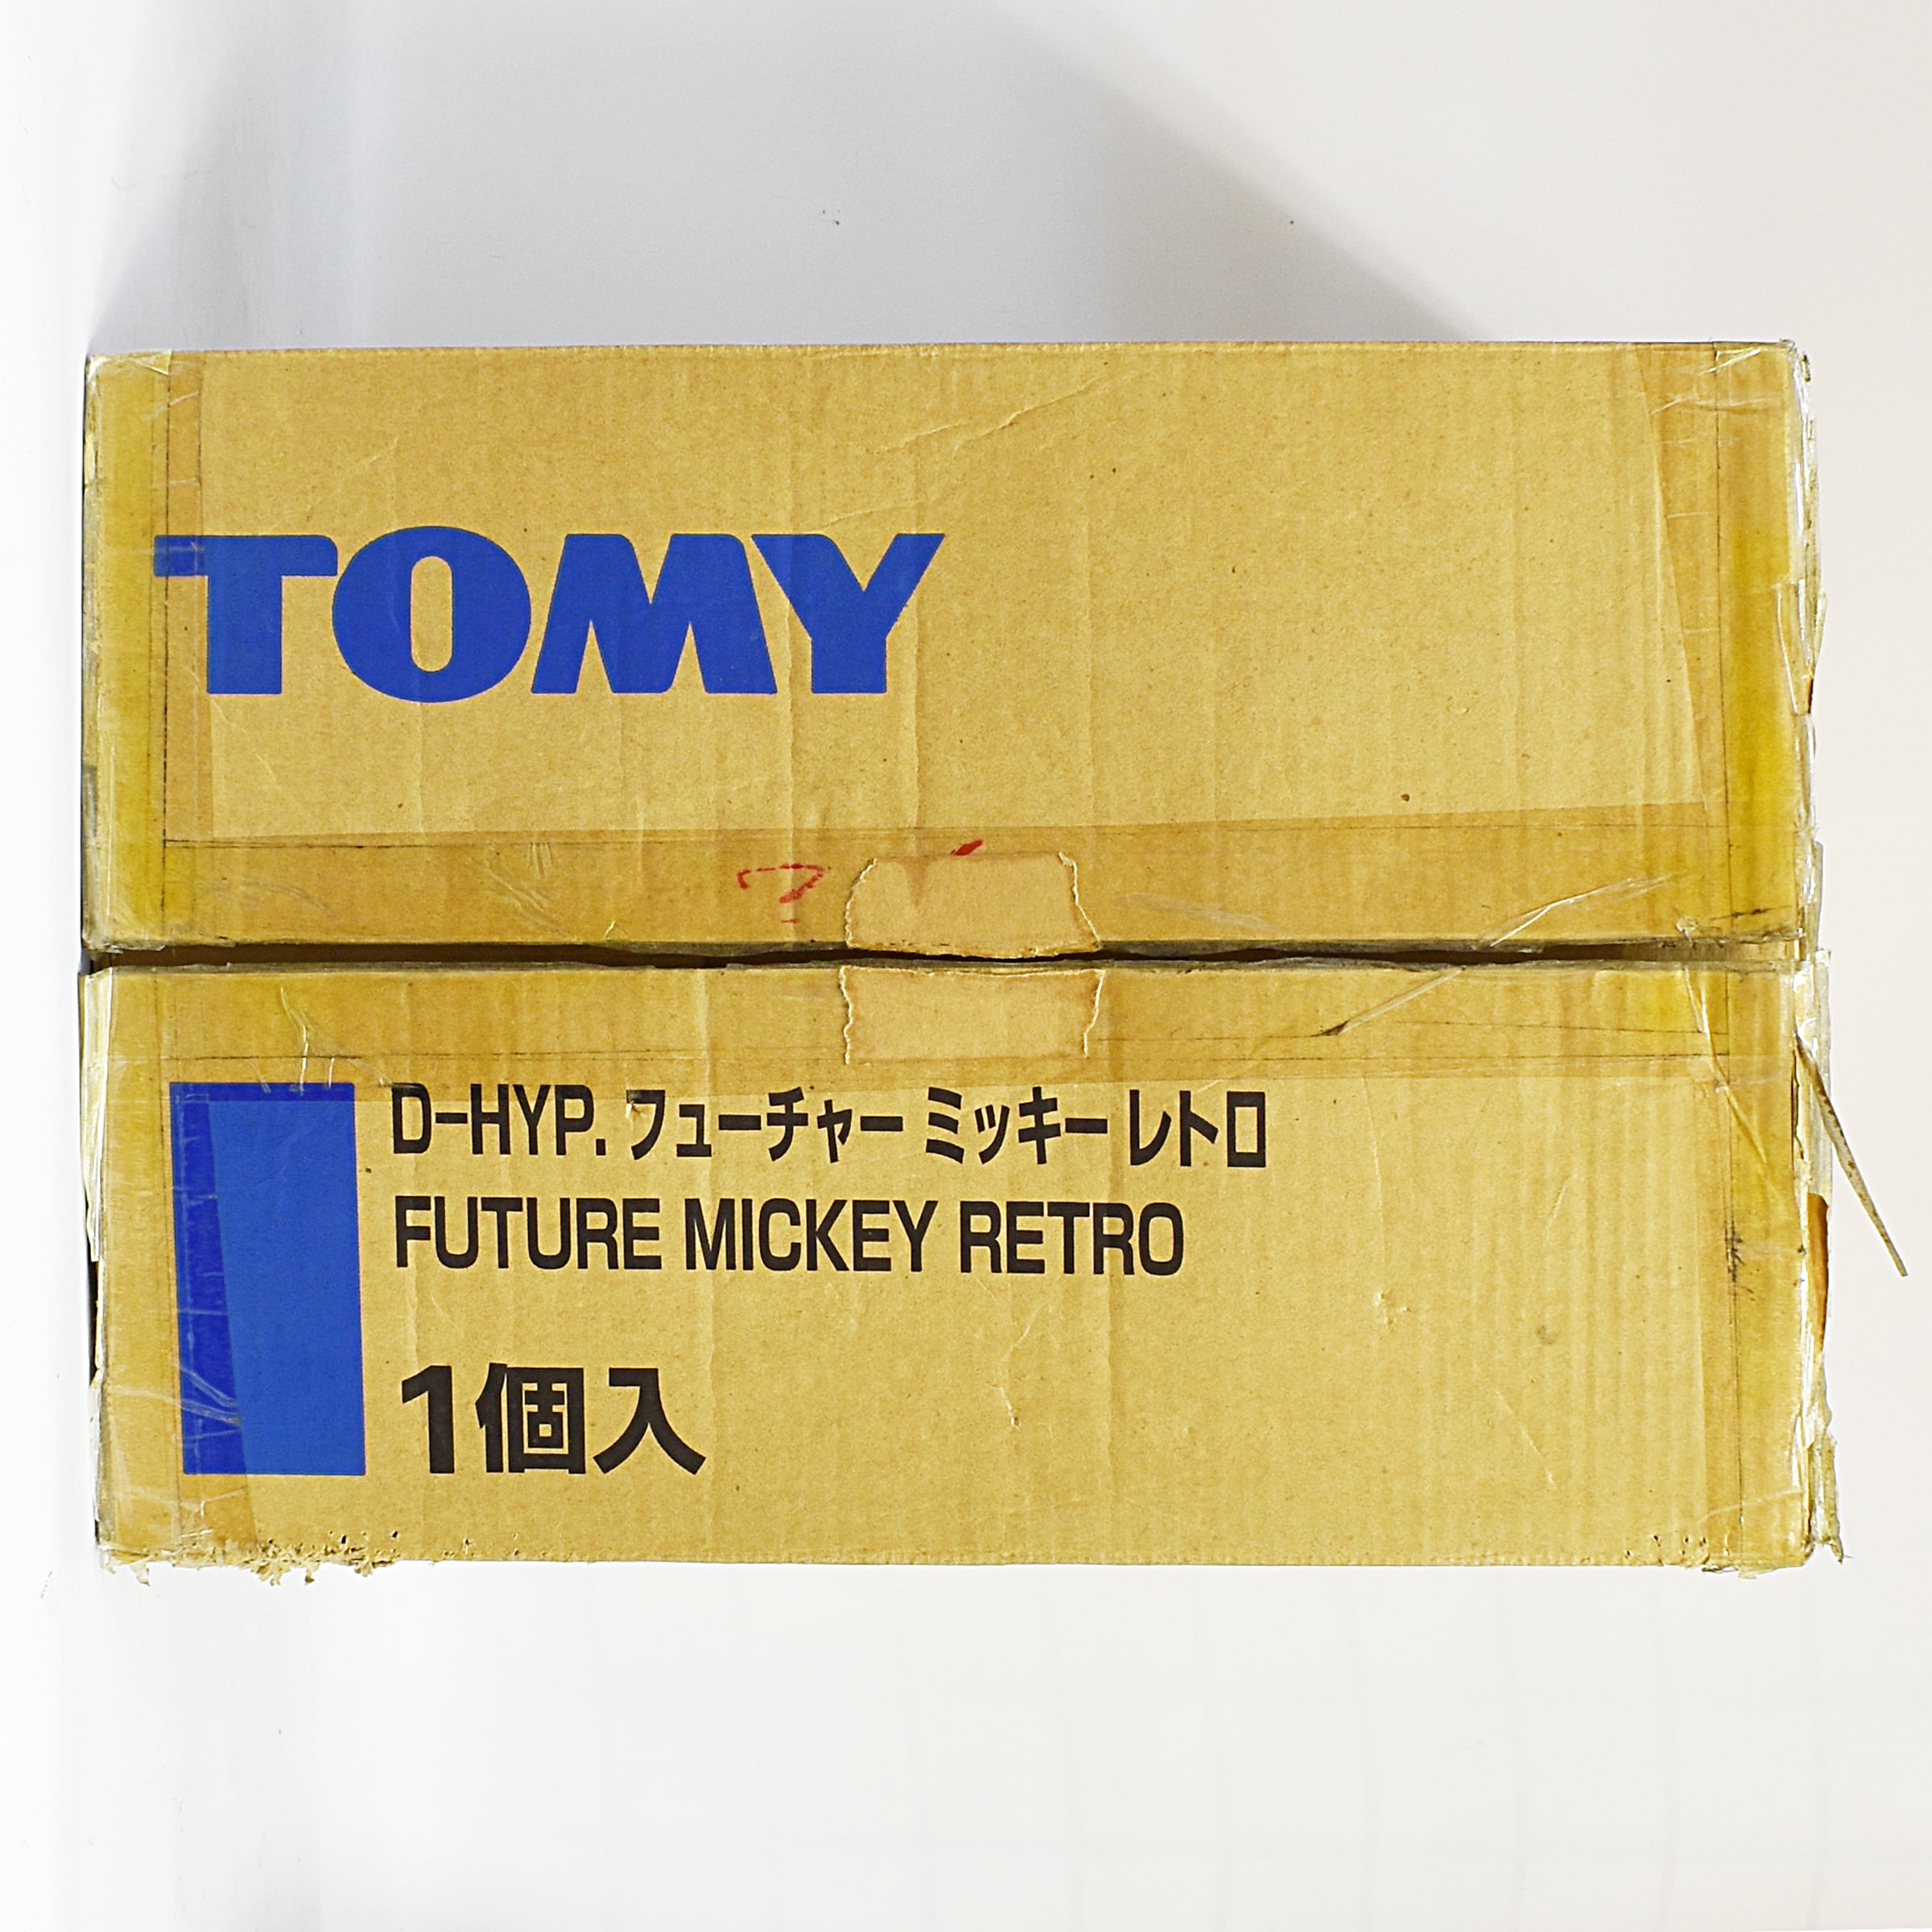 TOMY D-HYP. FUTURE MICKEY RETRO 空山基